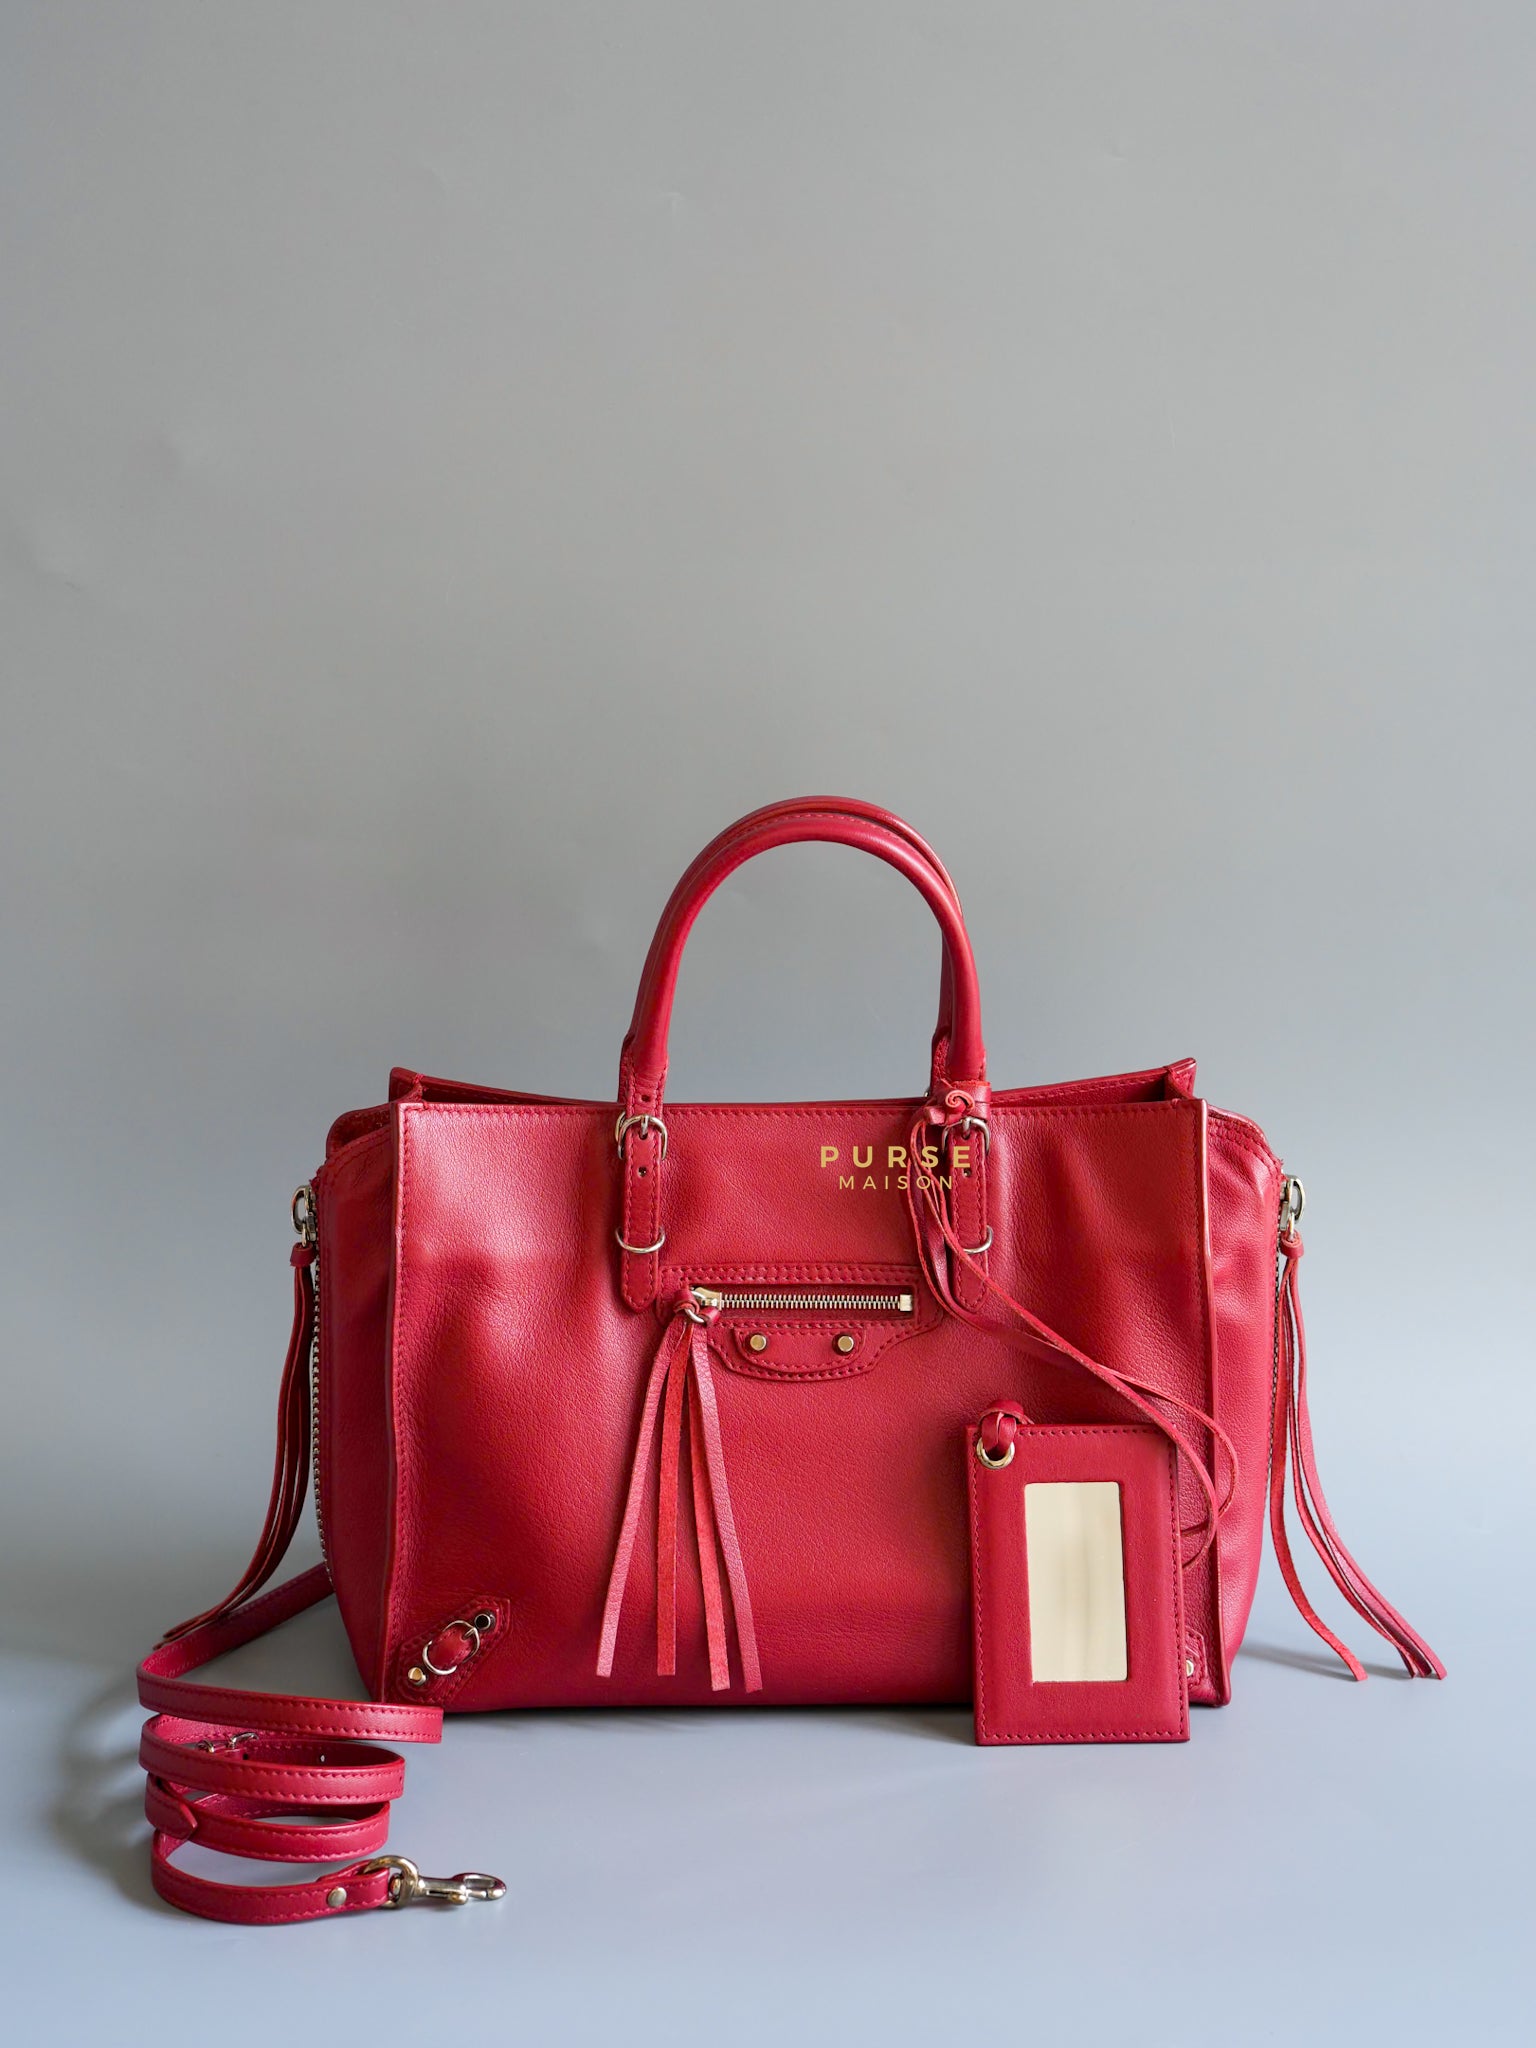 Mini Papier A4 in Red Leather Bag | Purse Maison Luxury Bags Shop